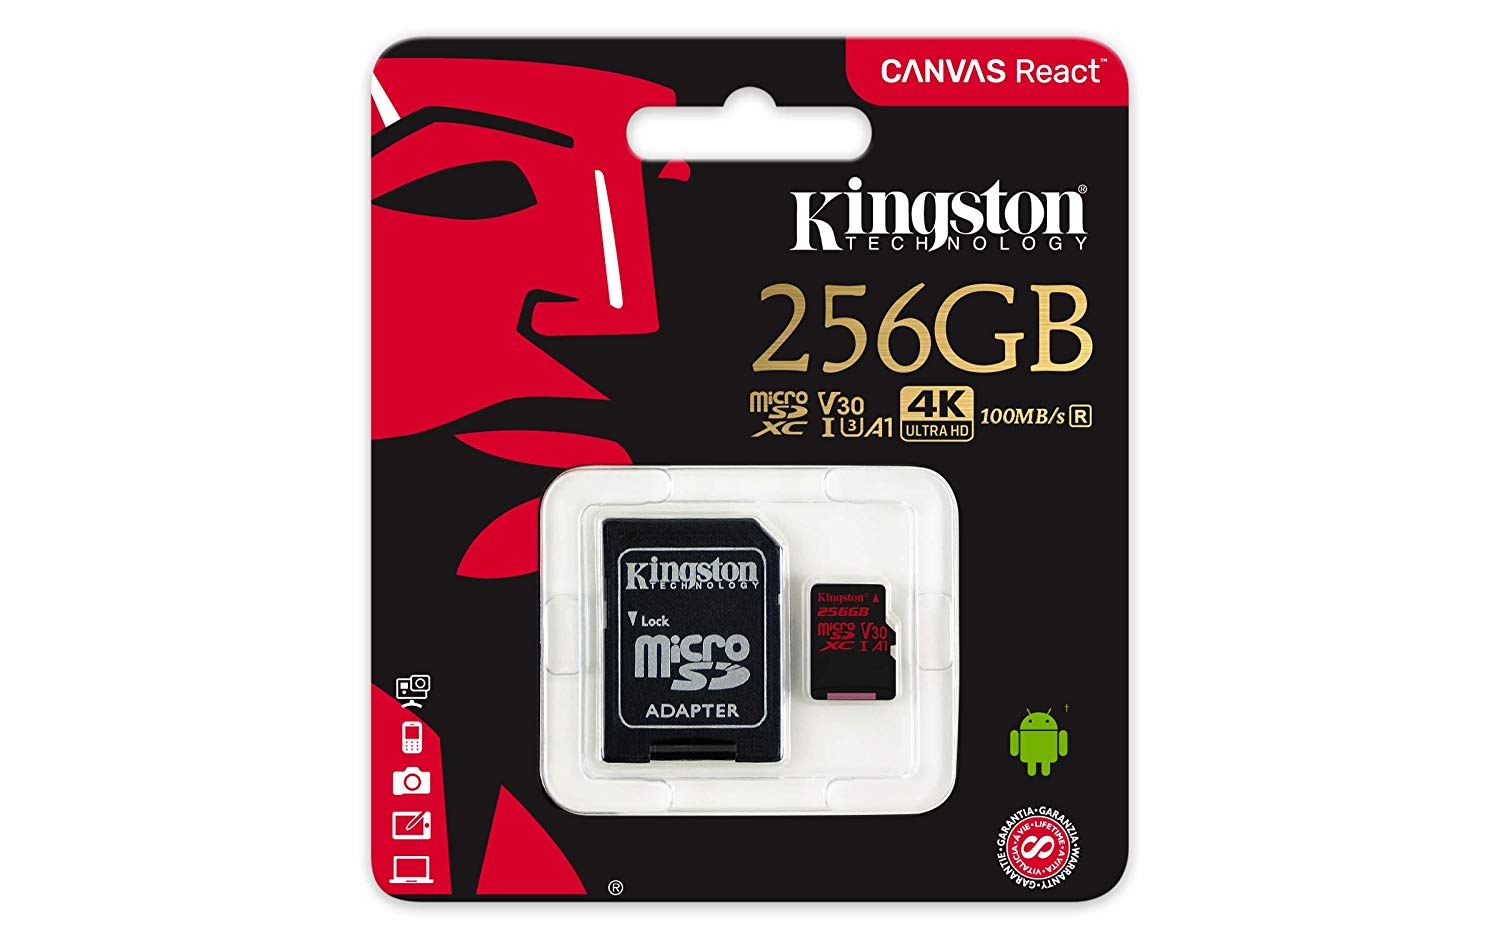 KINGSTON MICRO SD 256GB CL10 CANVAS REACT SDCR/256GB